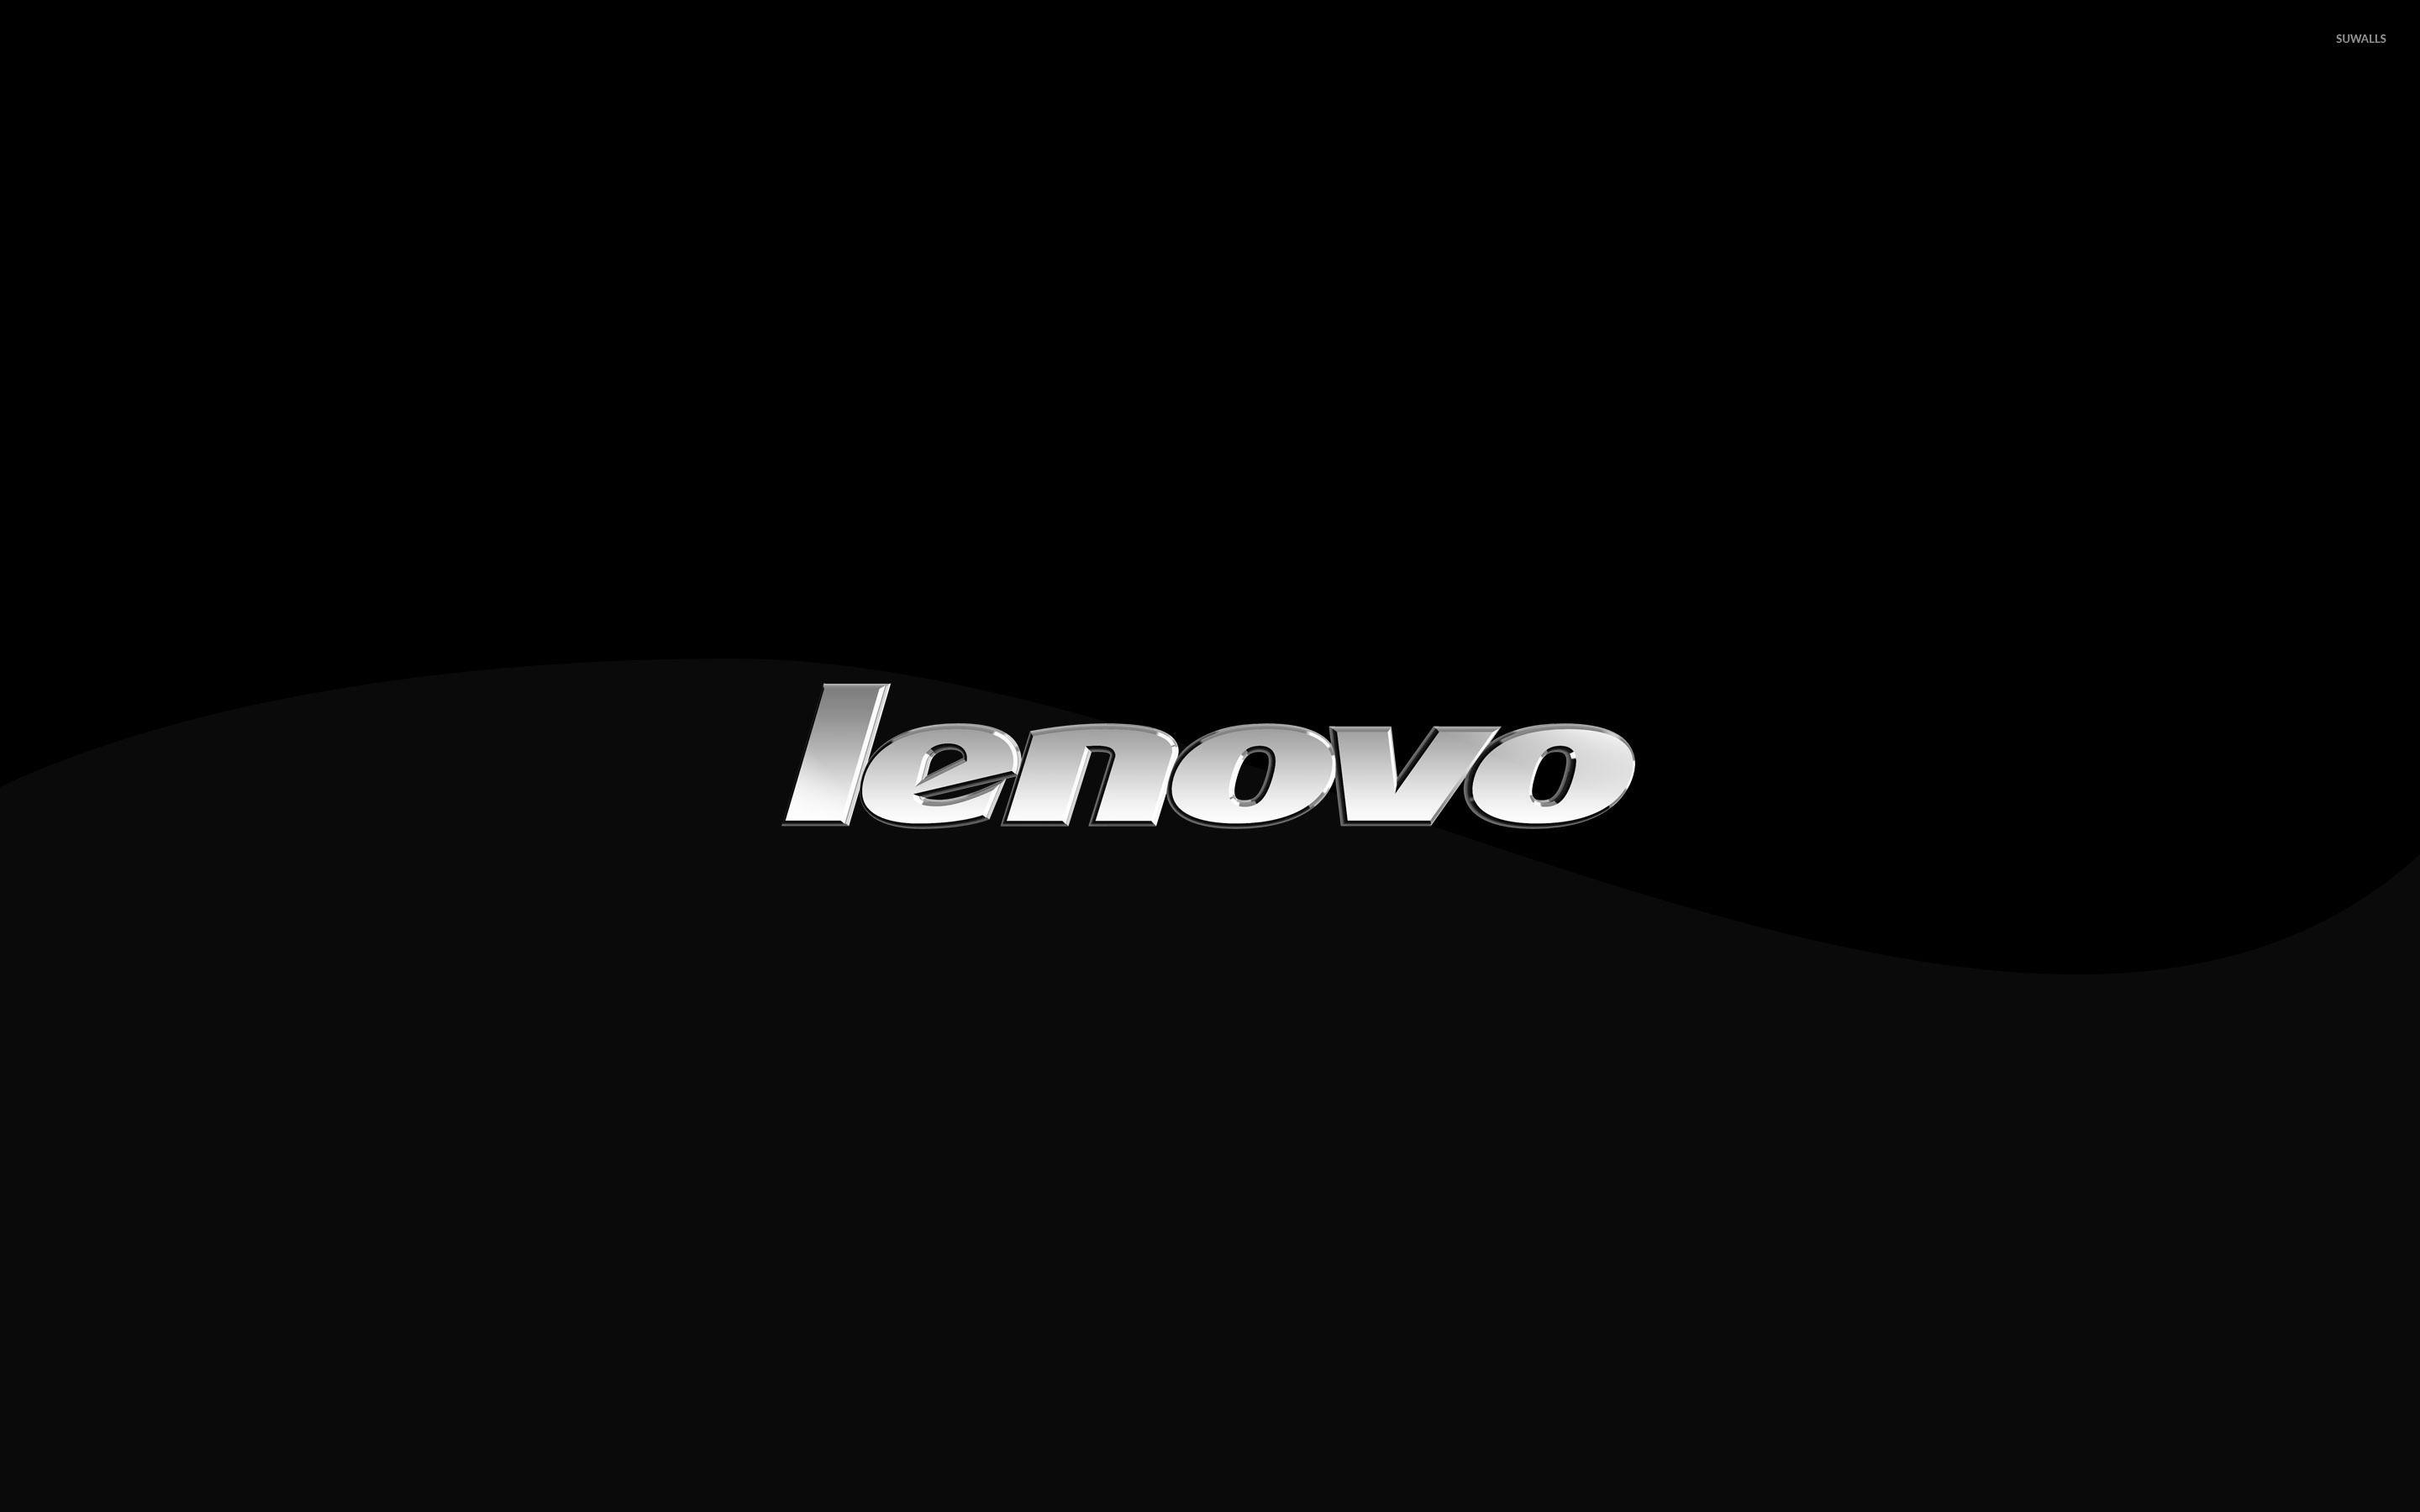  Lenovo  Logo  Wallpapers Wallpaper Cave